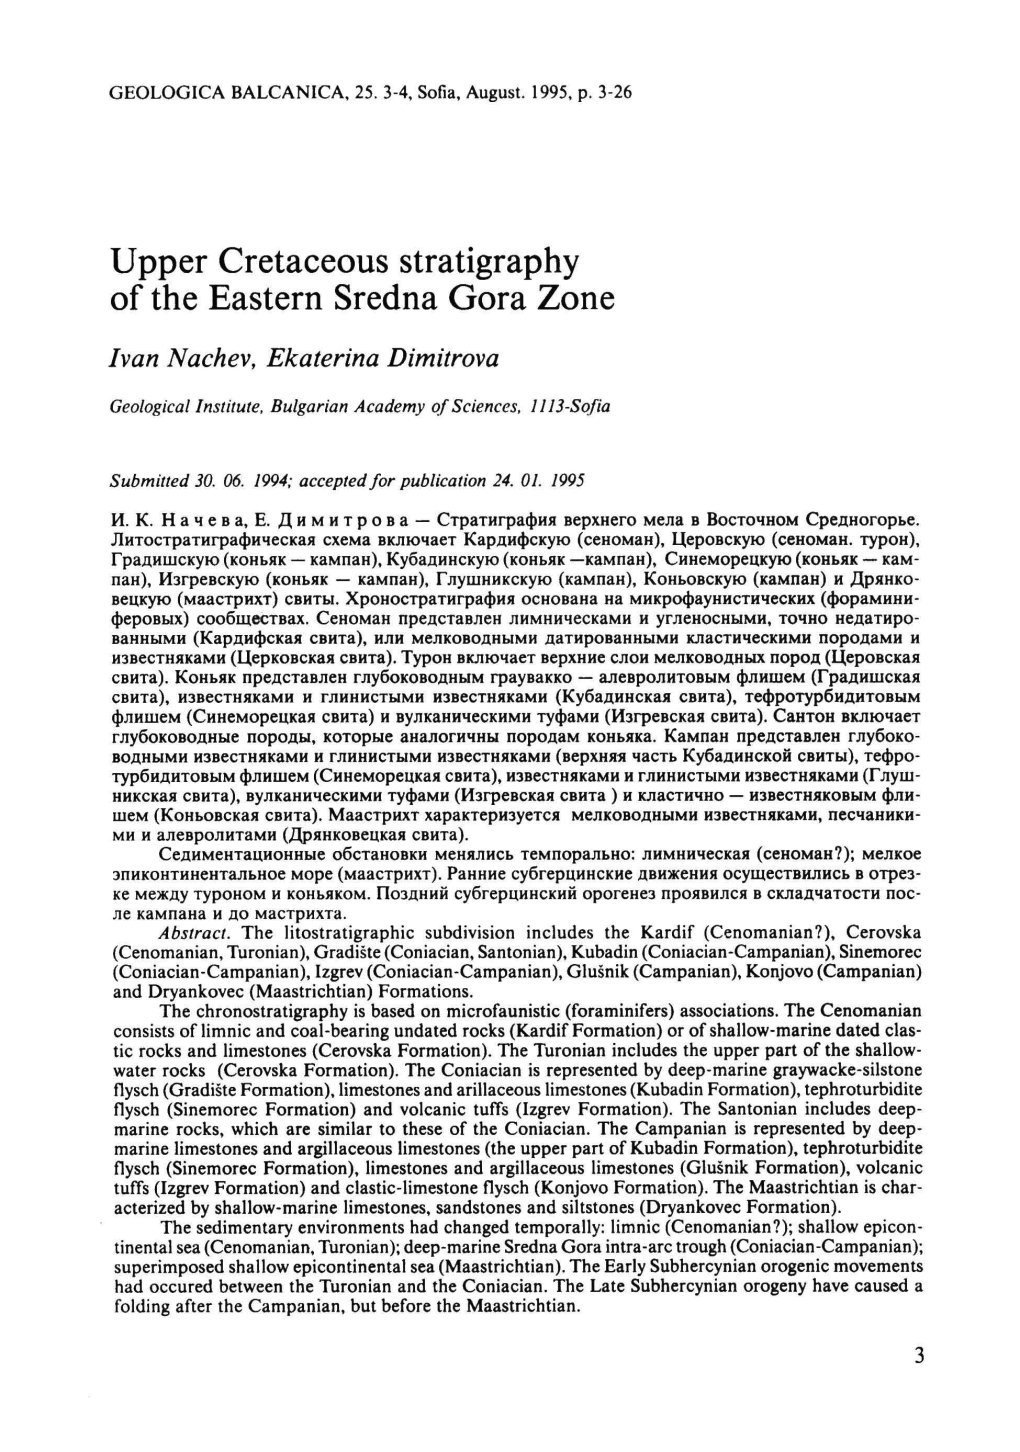 Upper Cretaceous Stratigraphy of the Eastern Sredna Gora Zone